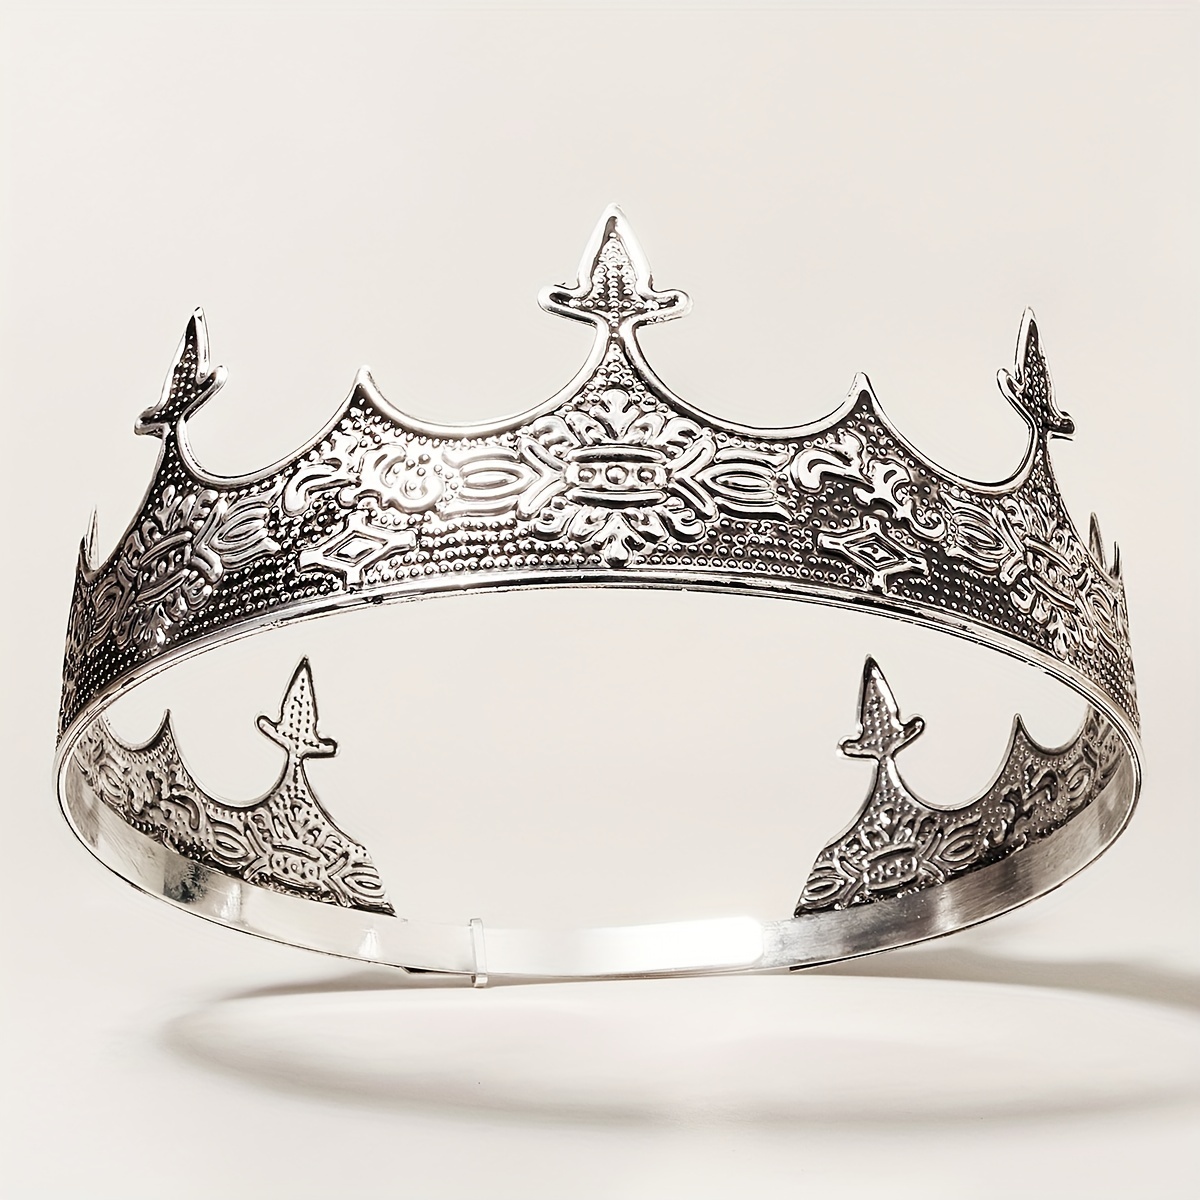 Corona del rey de metal